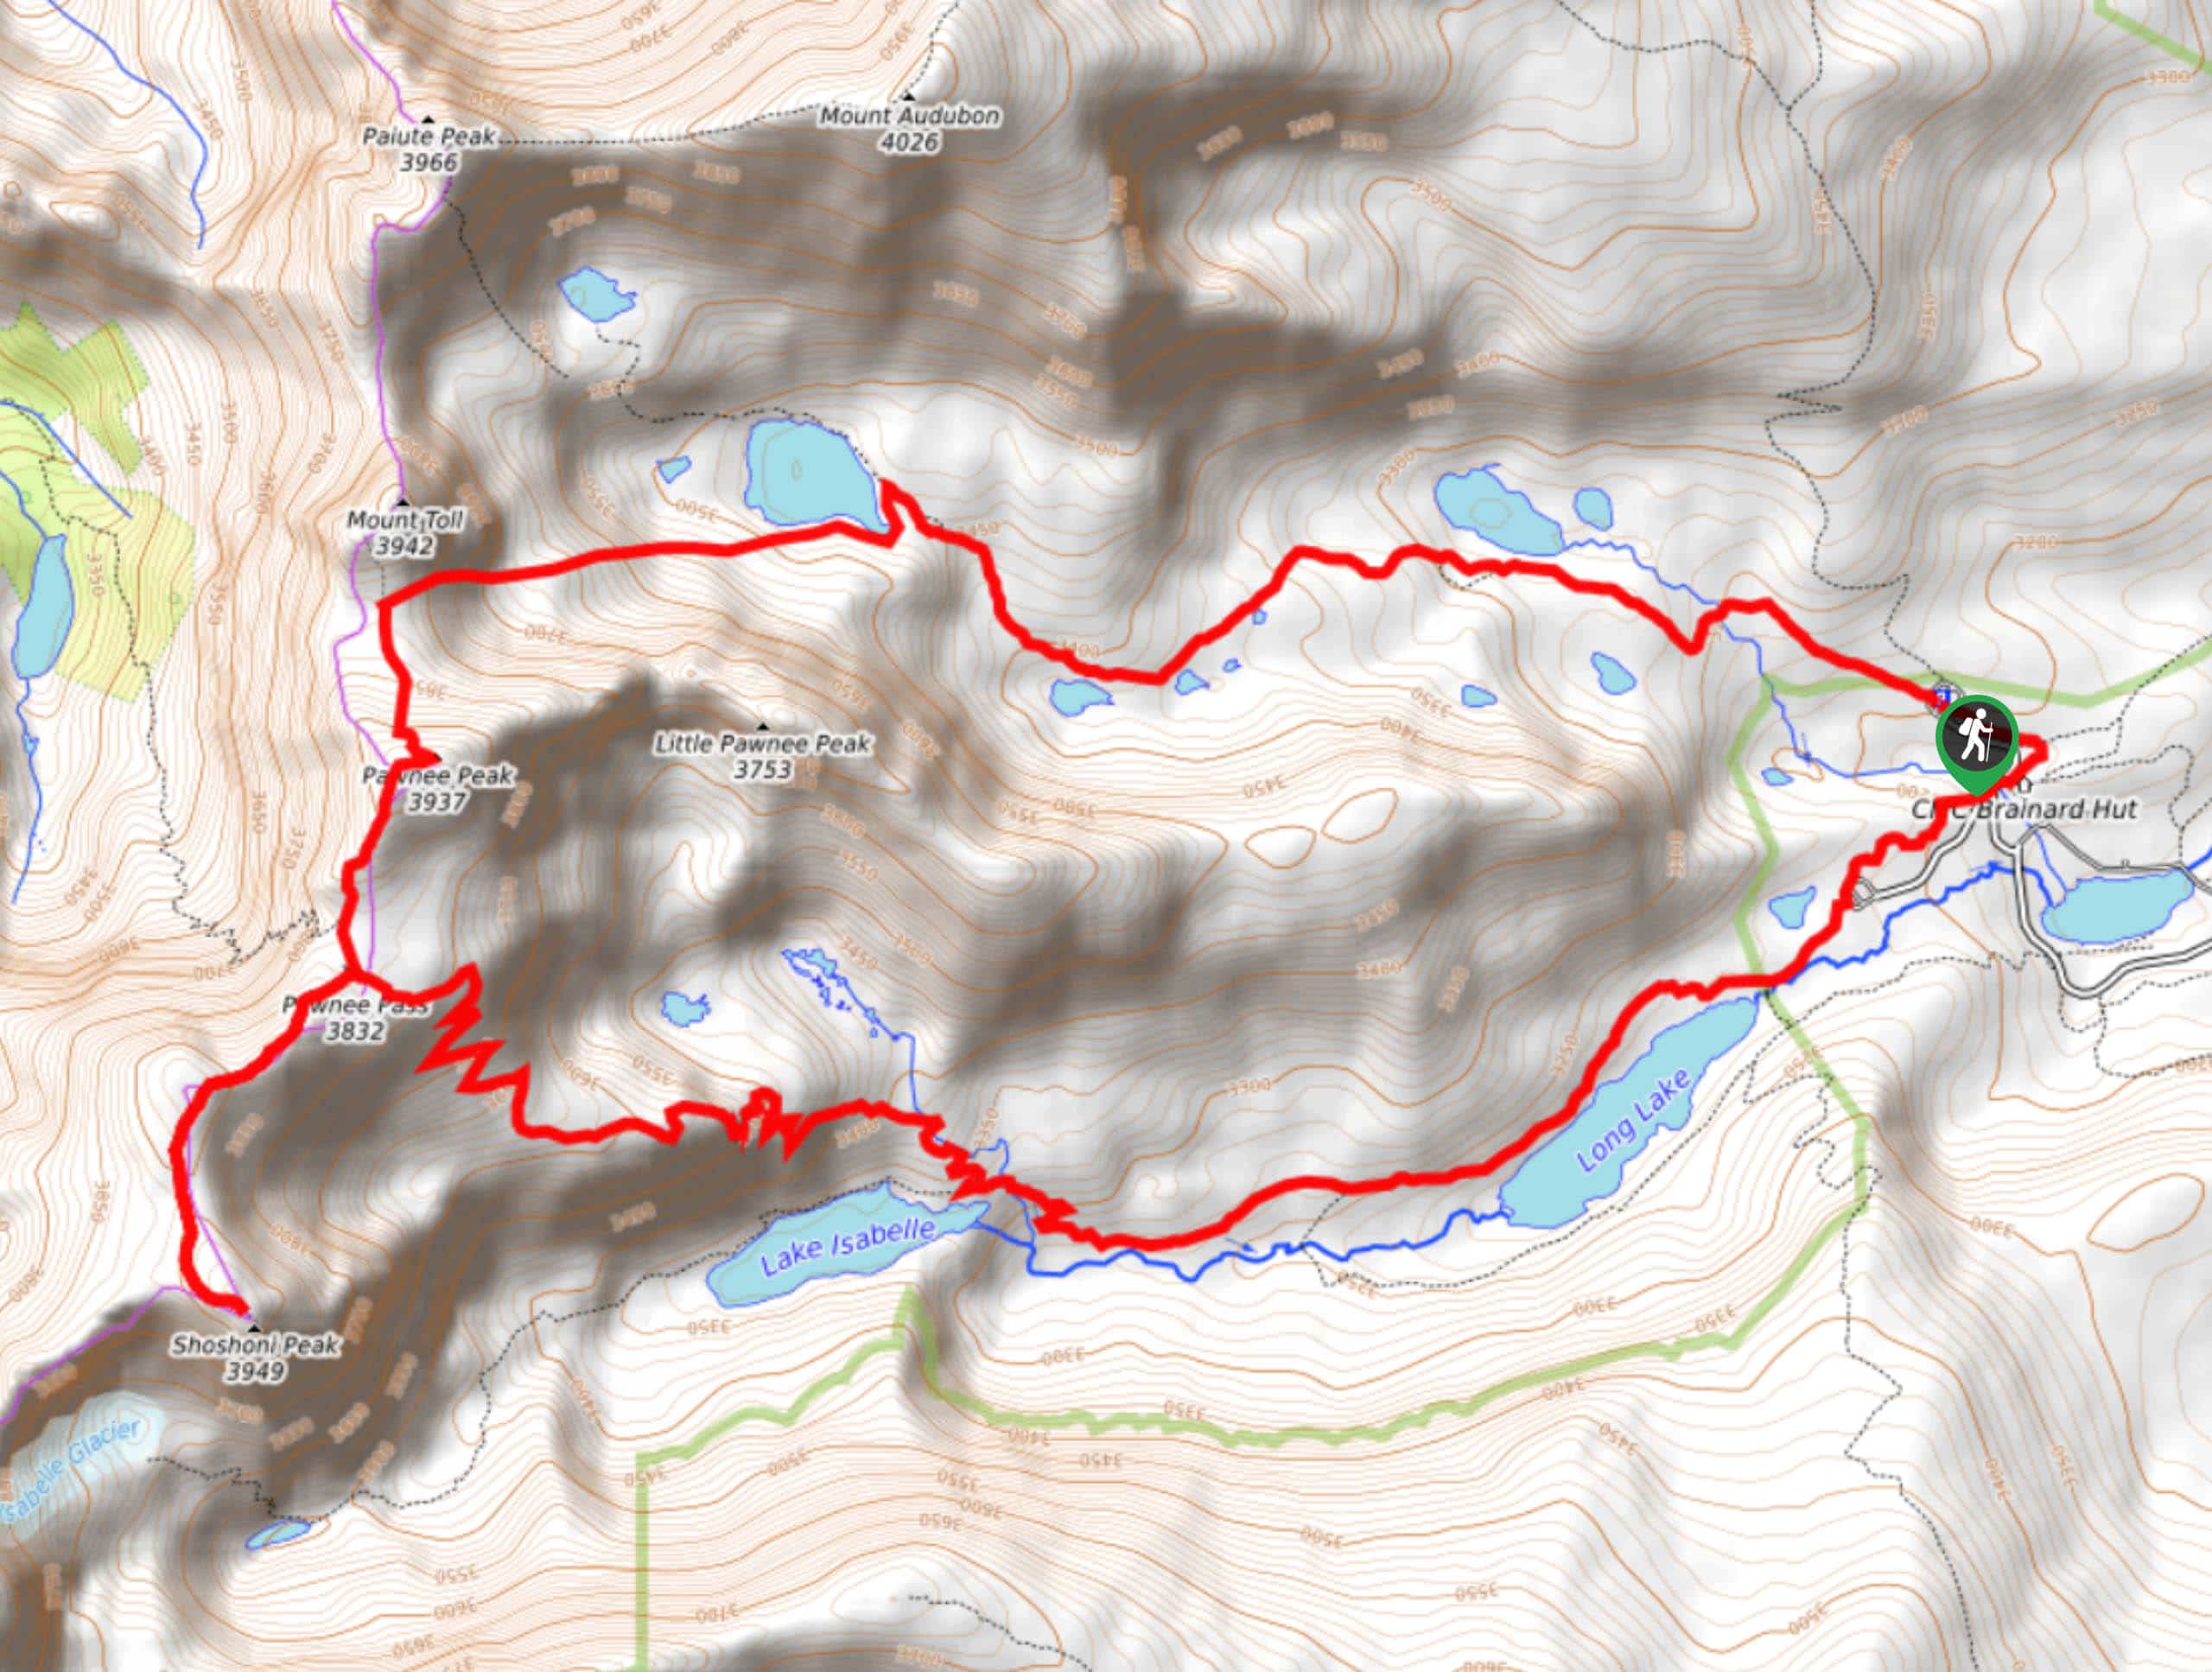 Shoshoni and Pawnee Peaks Hike Map